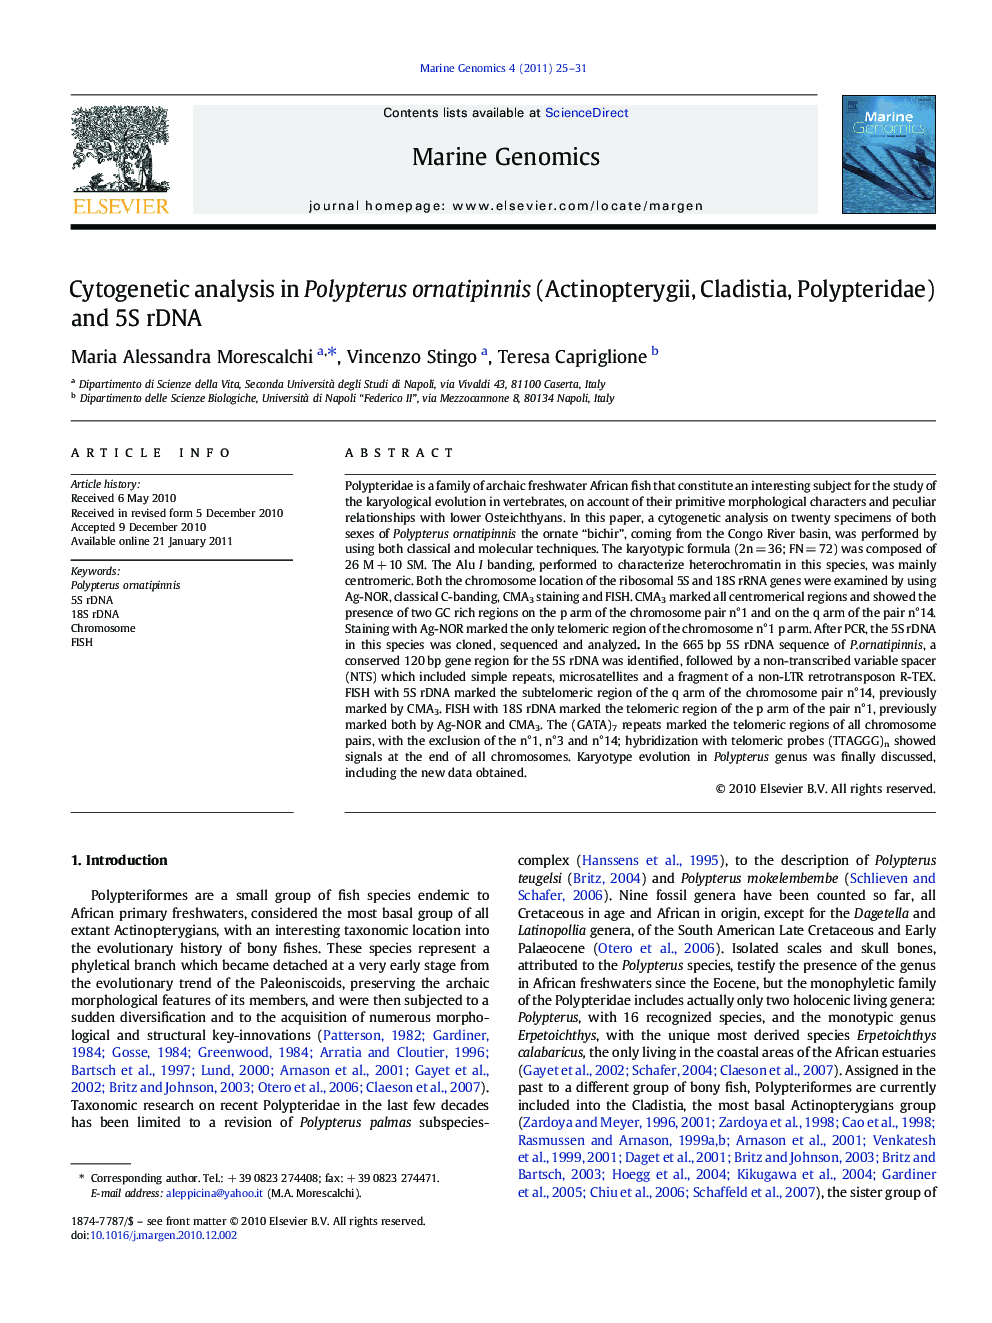 Cytogenetic analysis in Polypterus ornatipinnis (Actinopterygii, Cladistia, Polypteridae) and 5S rDNA